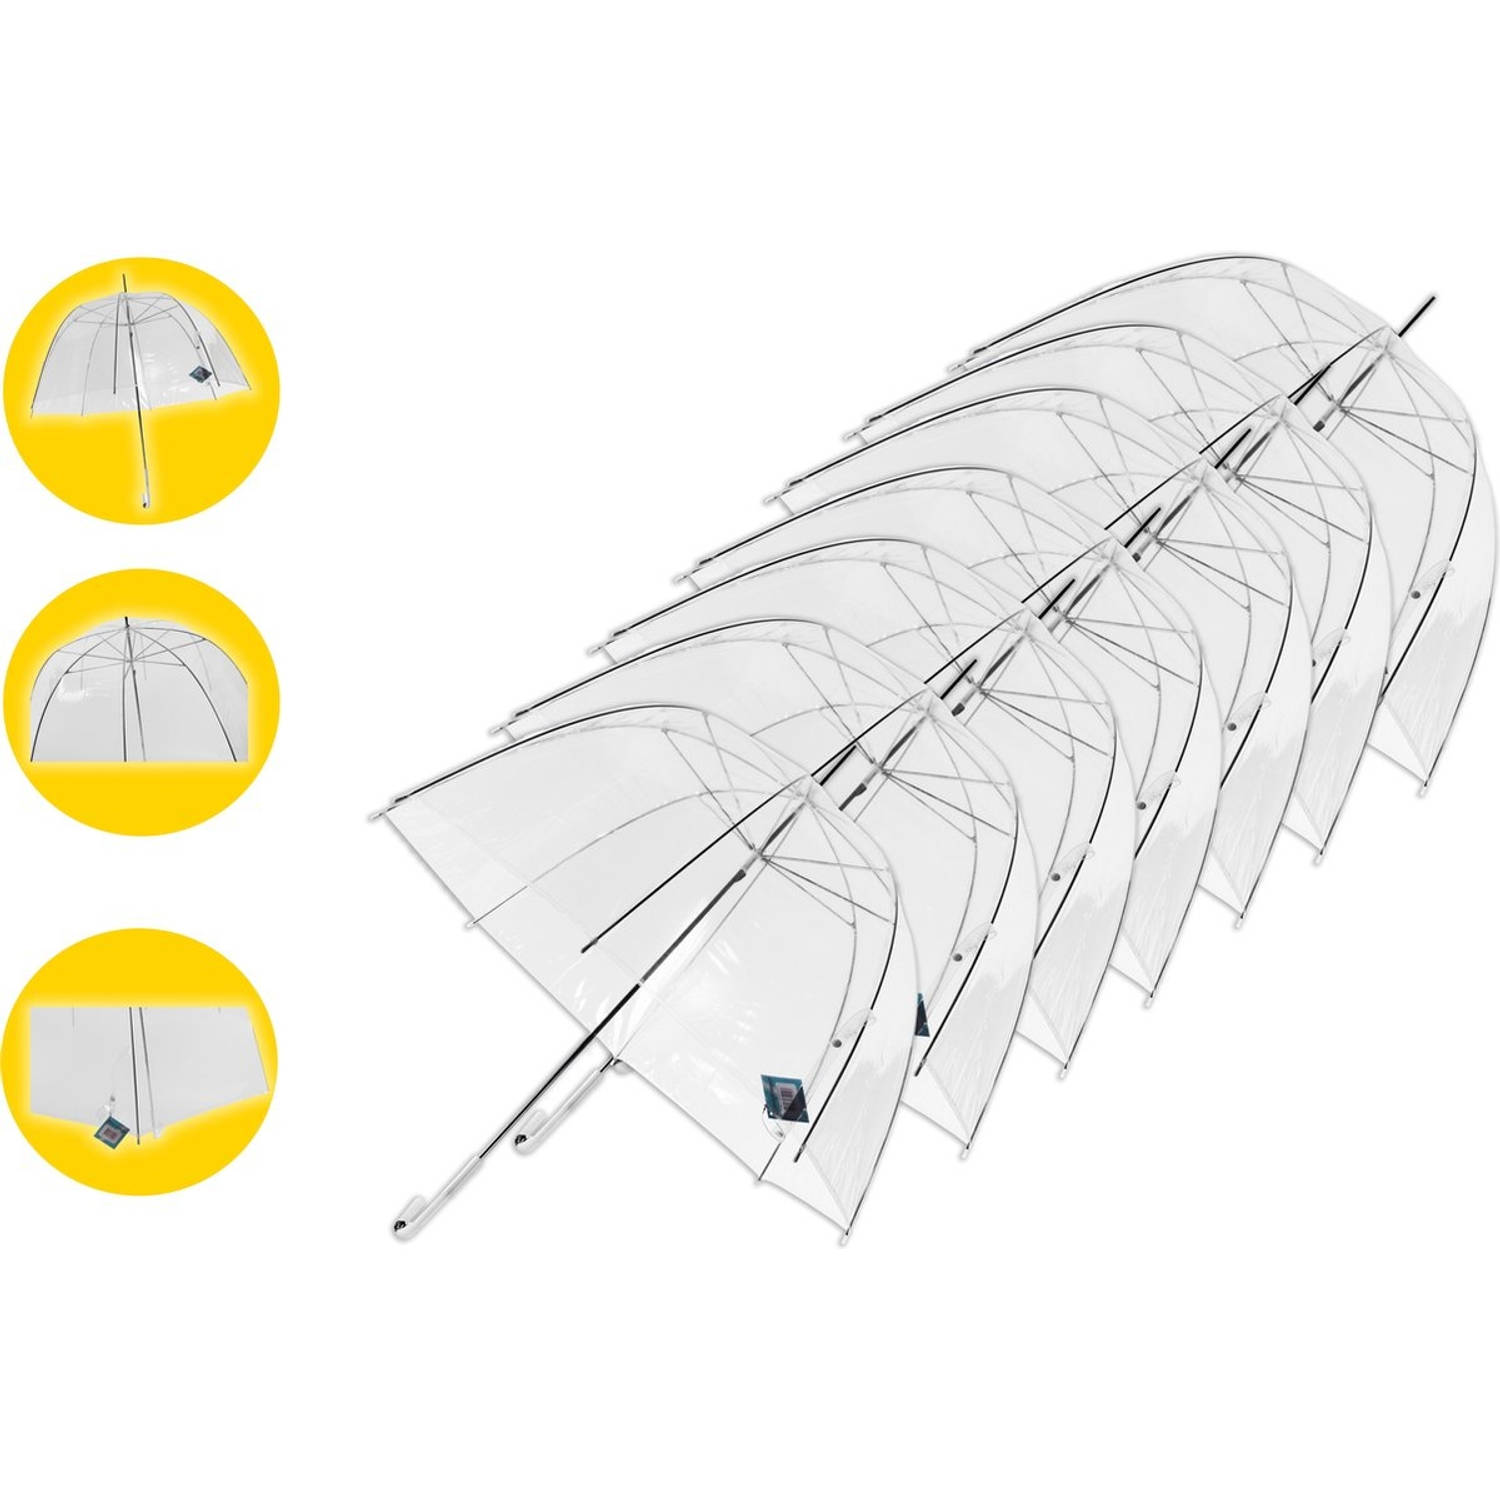 7 stuks Paraplu transparant plastic paraplu's 75 cm - doorzichtige paraplu - trouwparaplu - bruidsparaplu - stijlvol - bruiloft - trouwen - fashionable - trouwparaplu